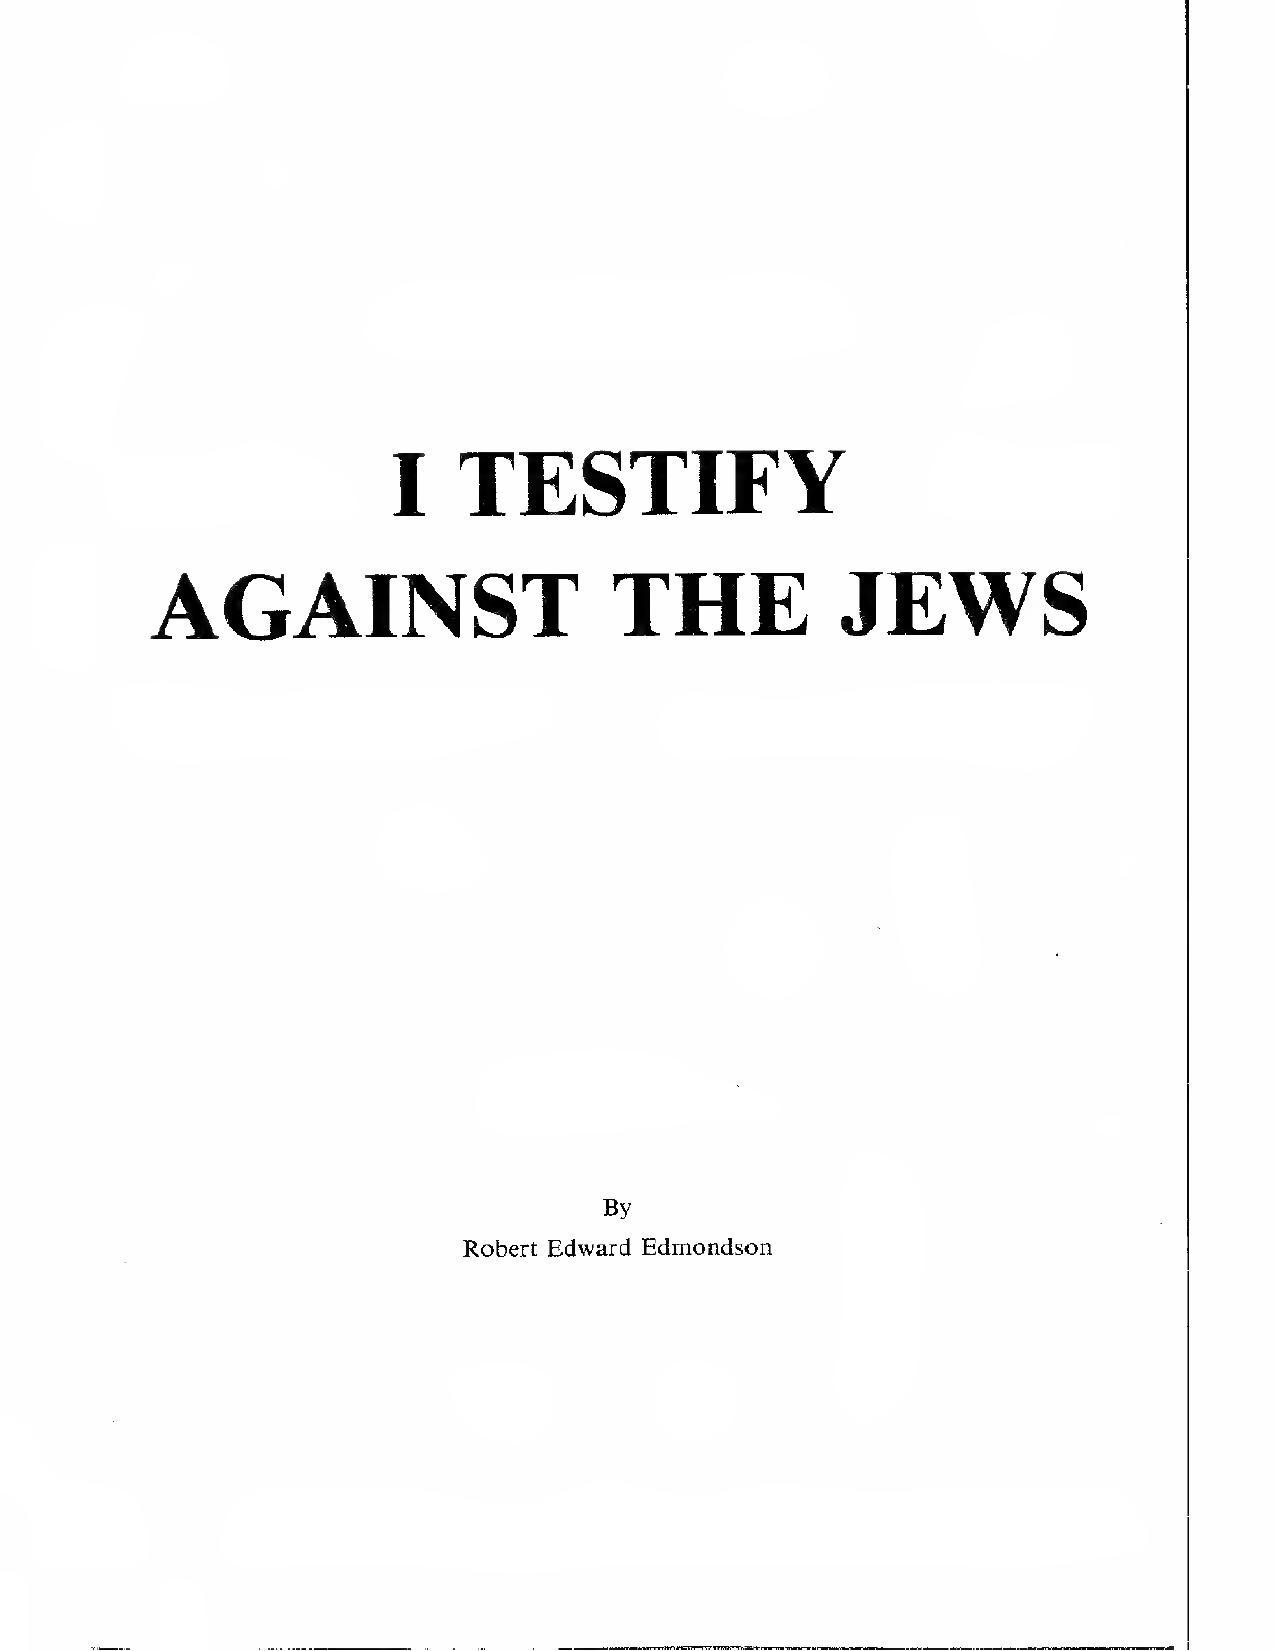 I Testify Against The Jews (1953) by Robert Edward Edmondson